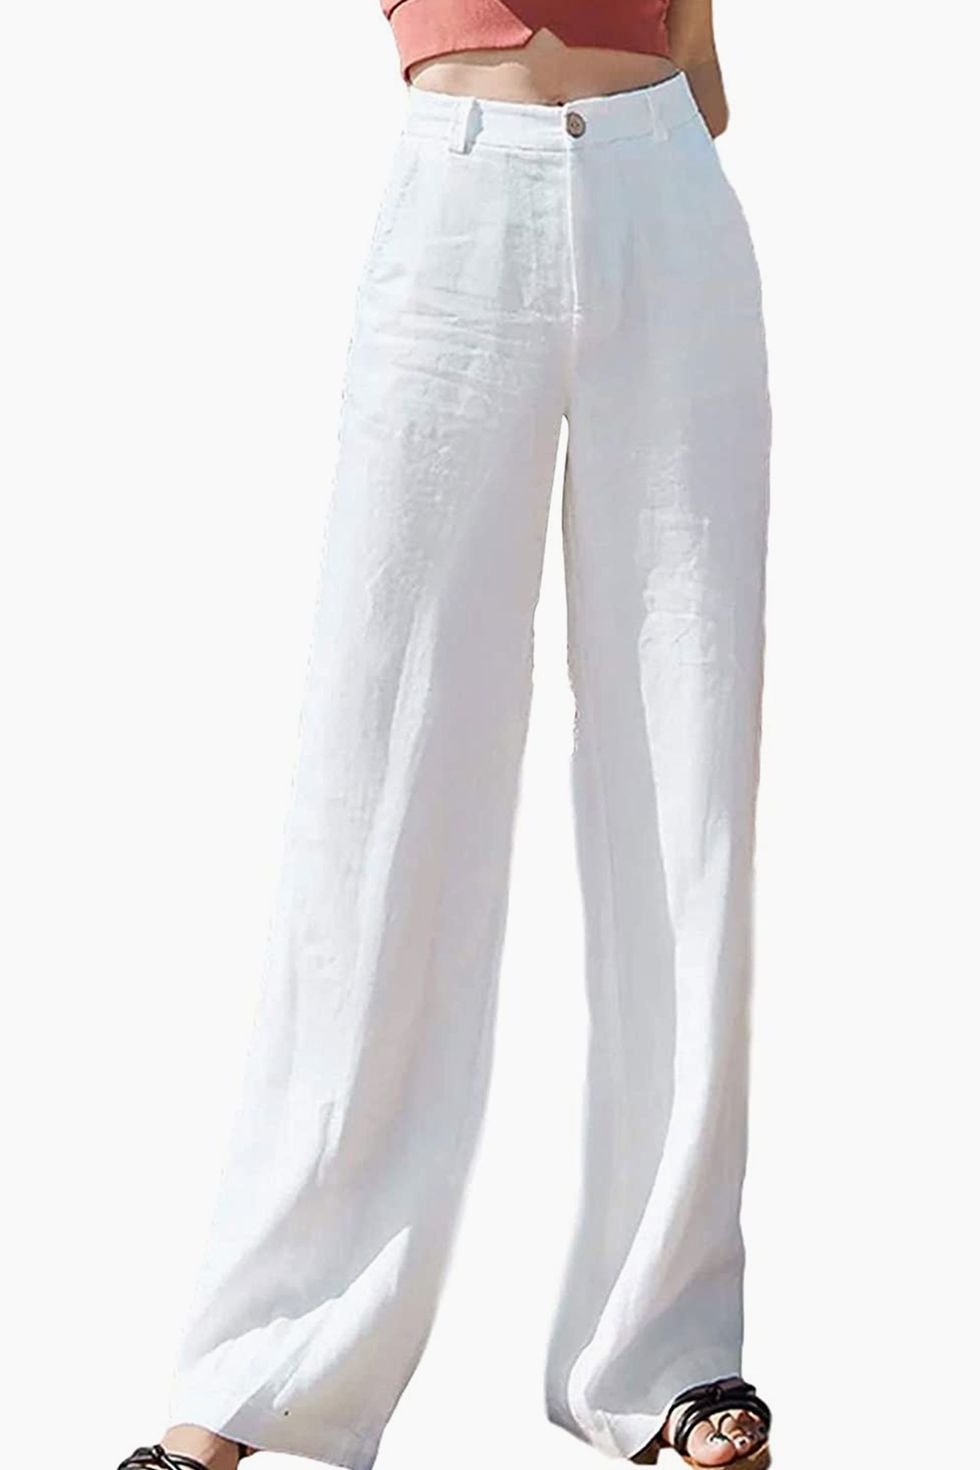 Wide Linen Pants, White Palazzo Pants, Wide Leg Pants for Women, White  Linen Trousers, Summer Pants, White Trousers, High Waist Pants -   Denmark